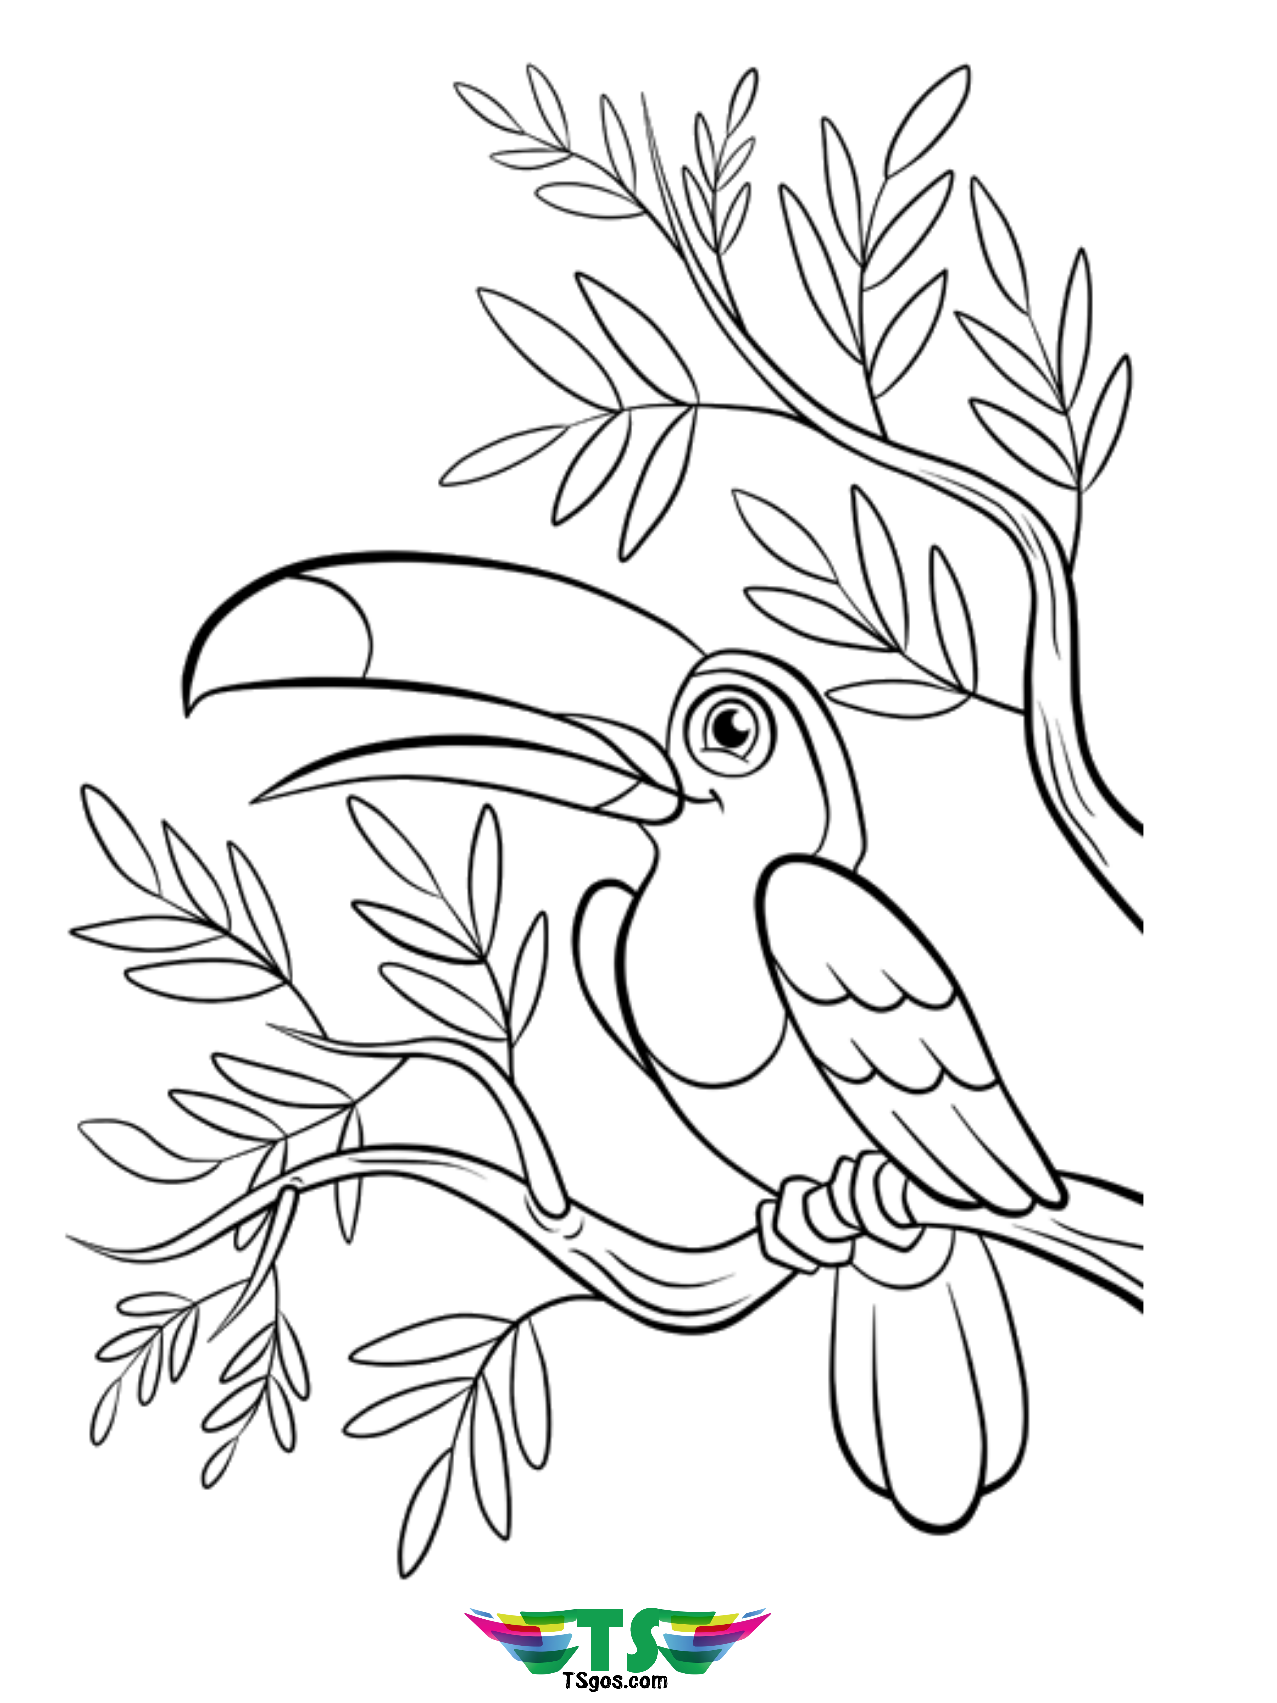 Beautiful bird coloring page free download. - TSgos.com